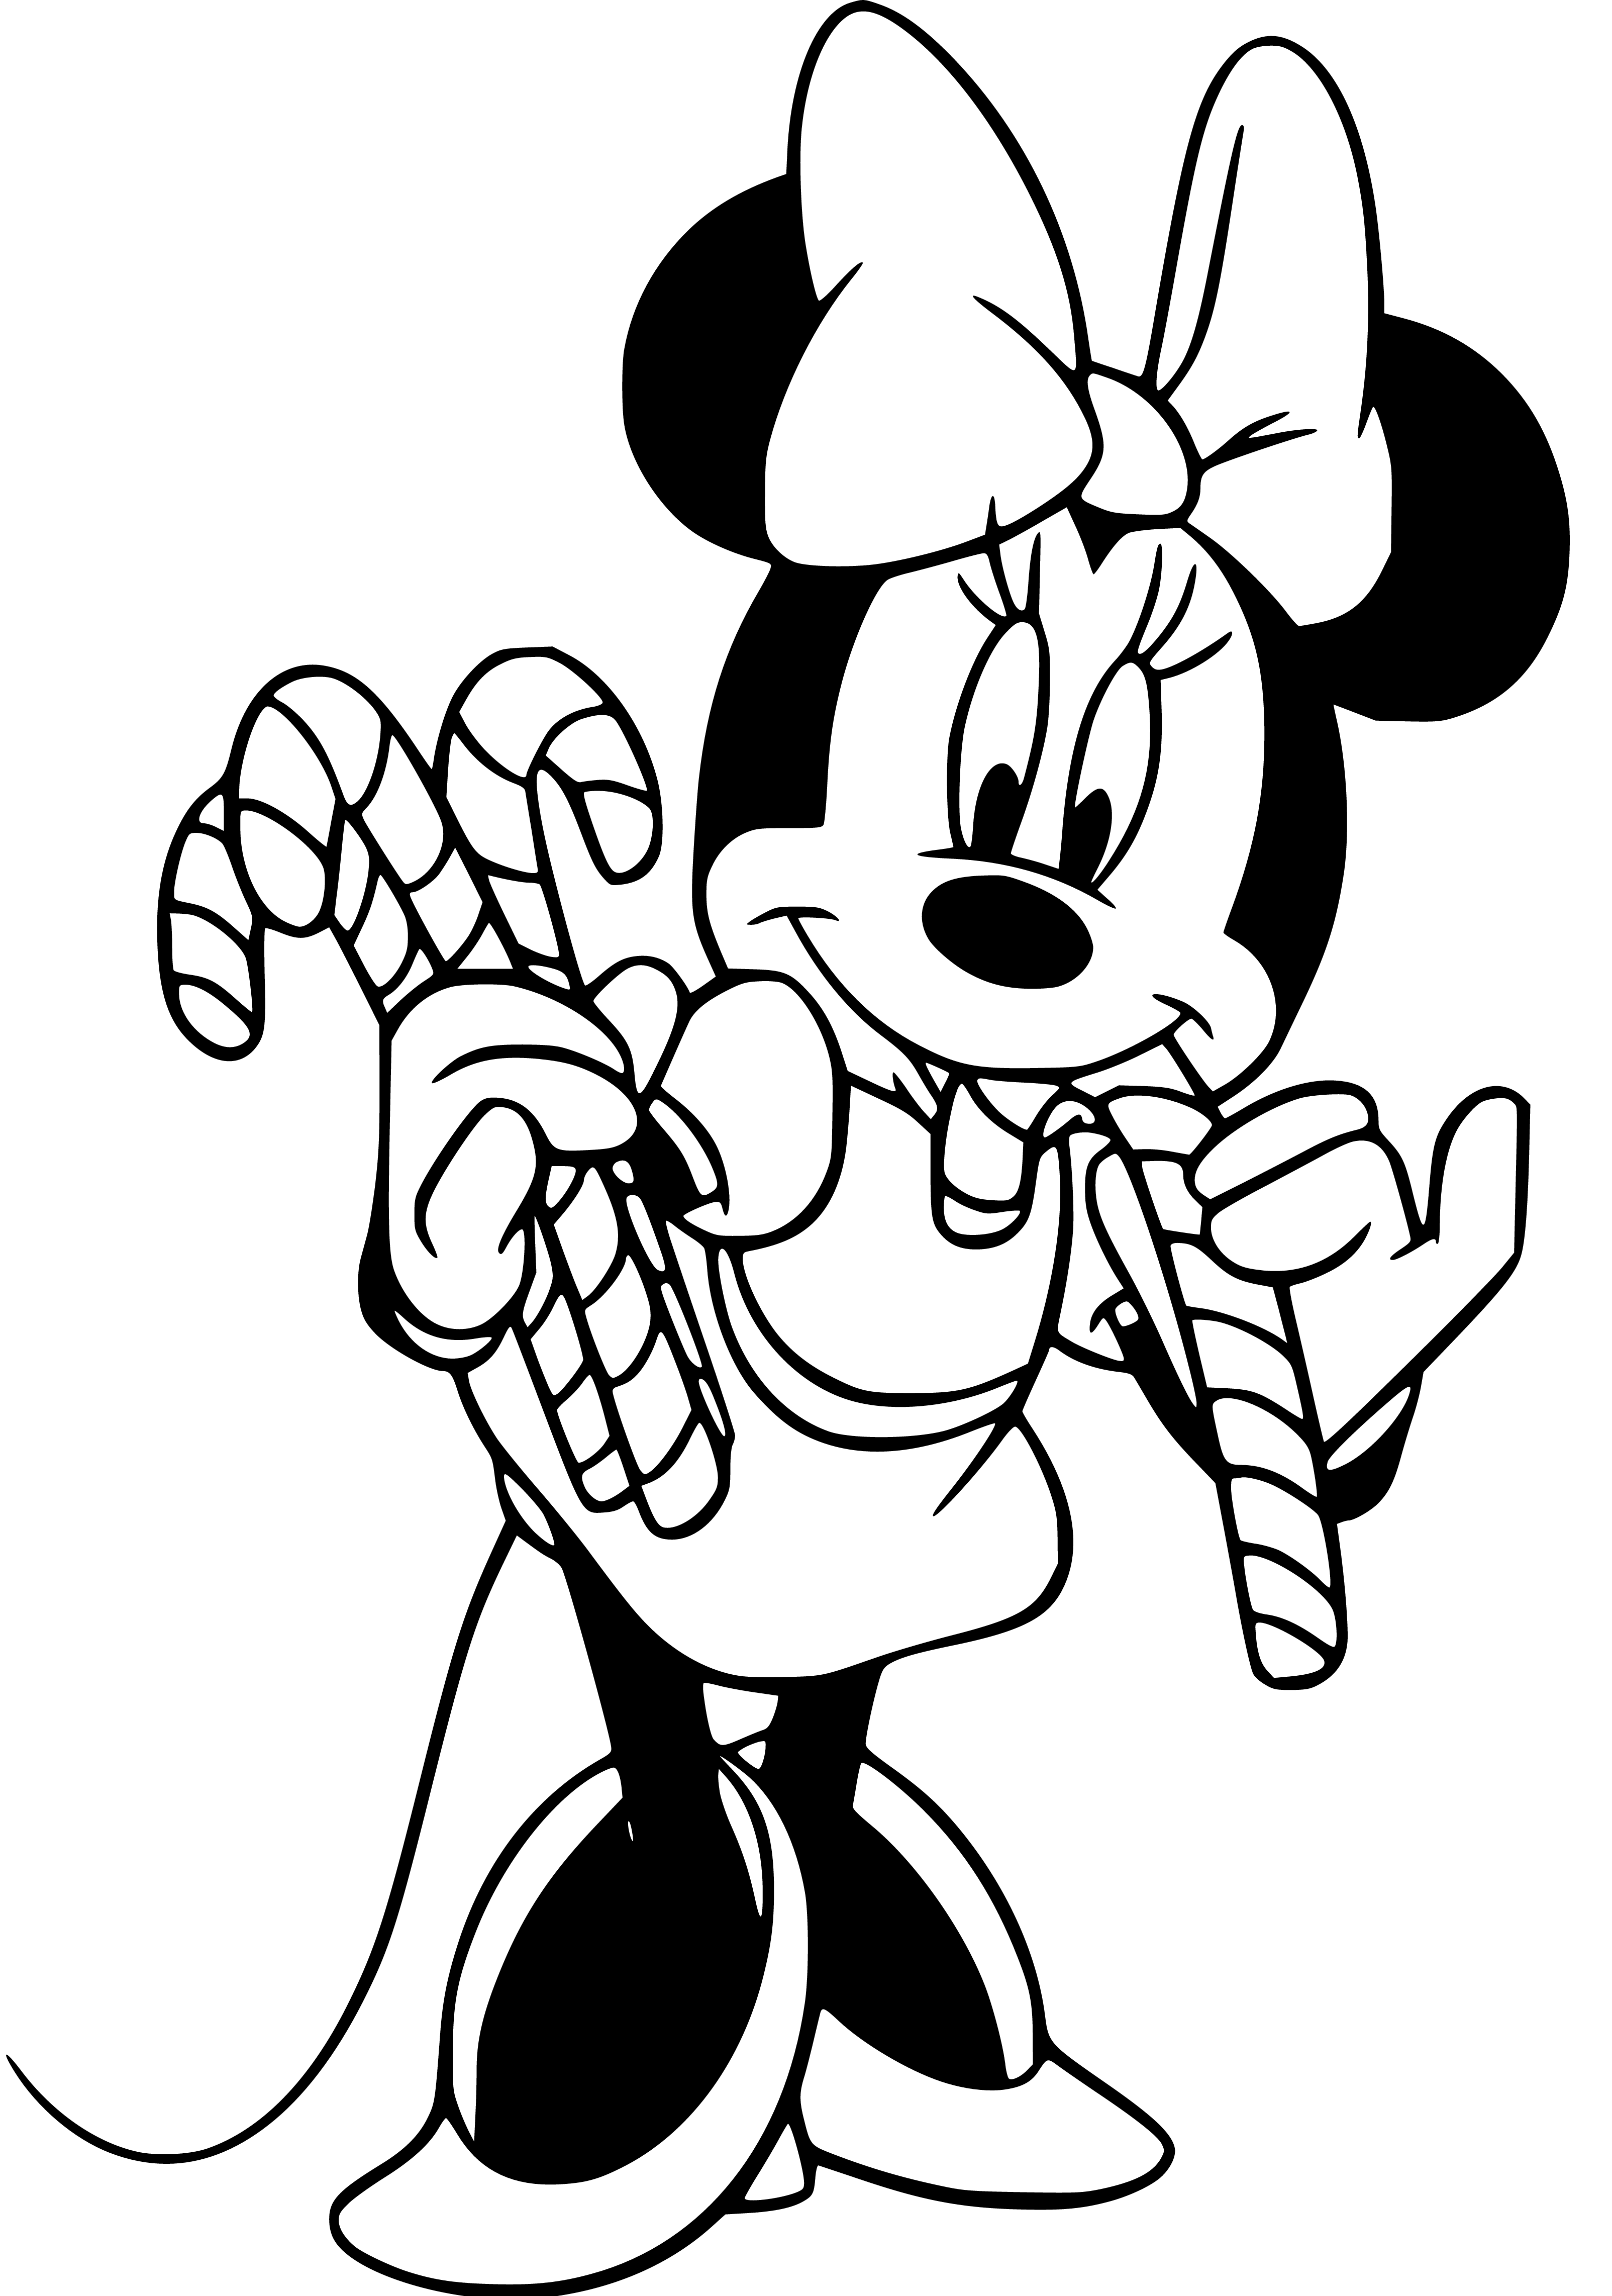 Minnie Mouse Drawing Page to Color Printable - SheetalColor.com